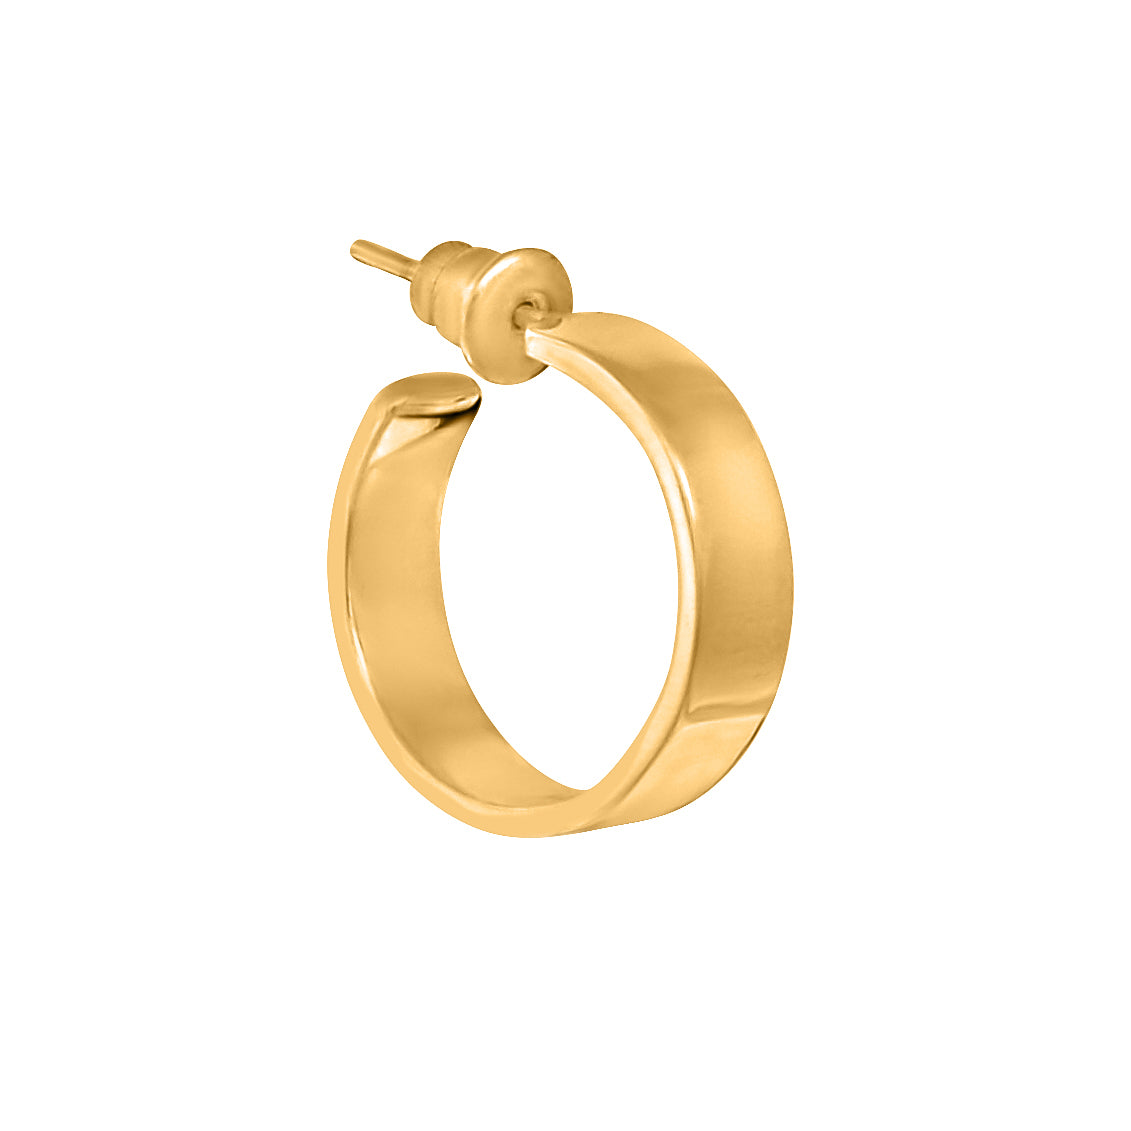 VIKA jewels self love collection earrings Ohrringe hoops Statement jewel recycled sterling gold 18 Karat carat vergoldet handmade bali sustainable ethical nachhaltig schmuck